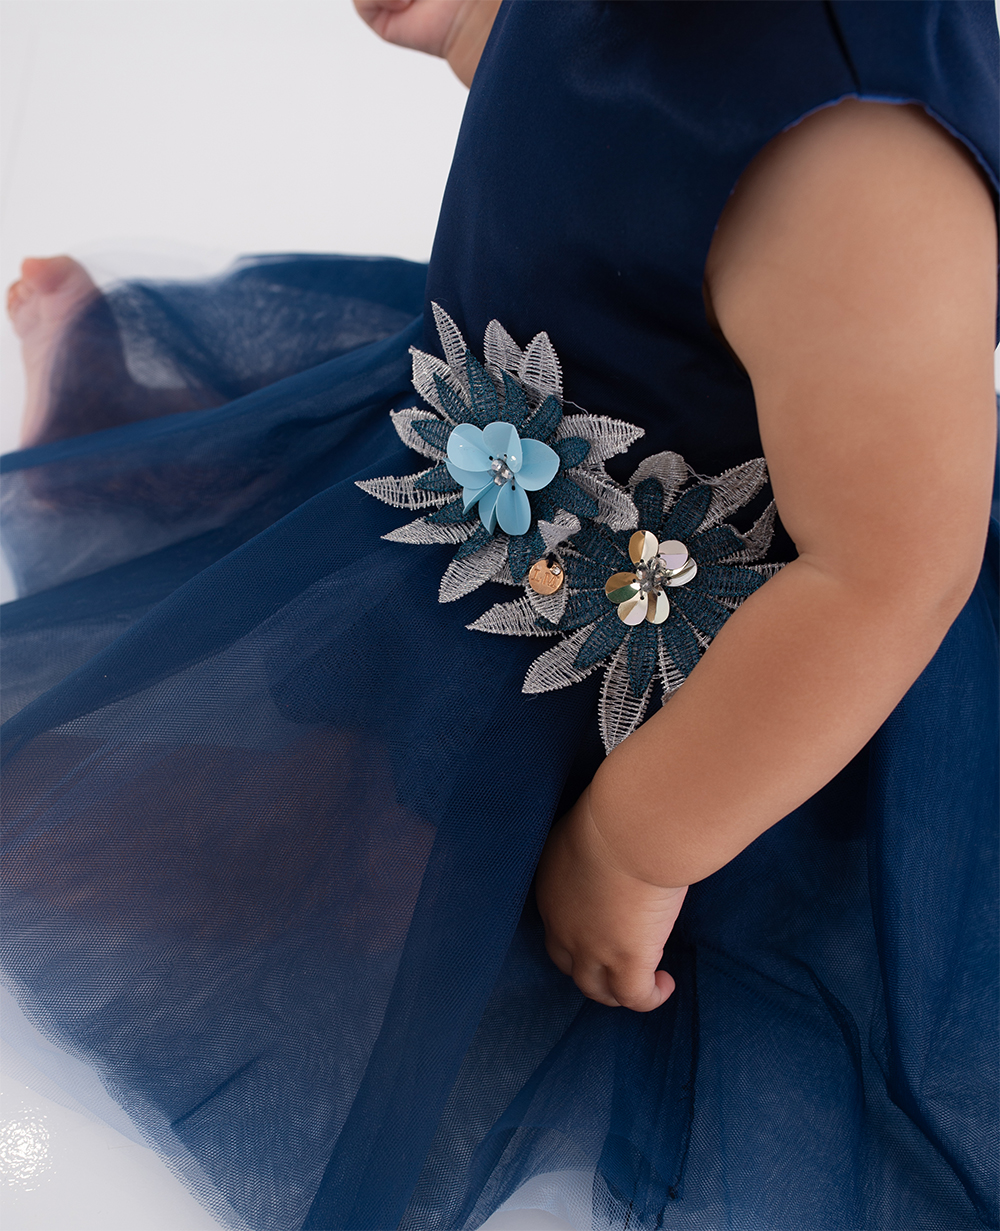 Blue Floral Tulle Dress